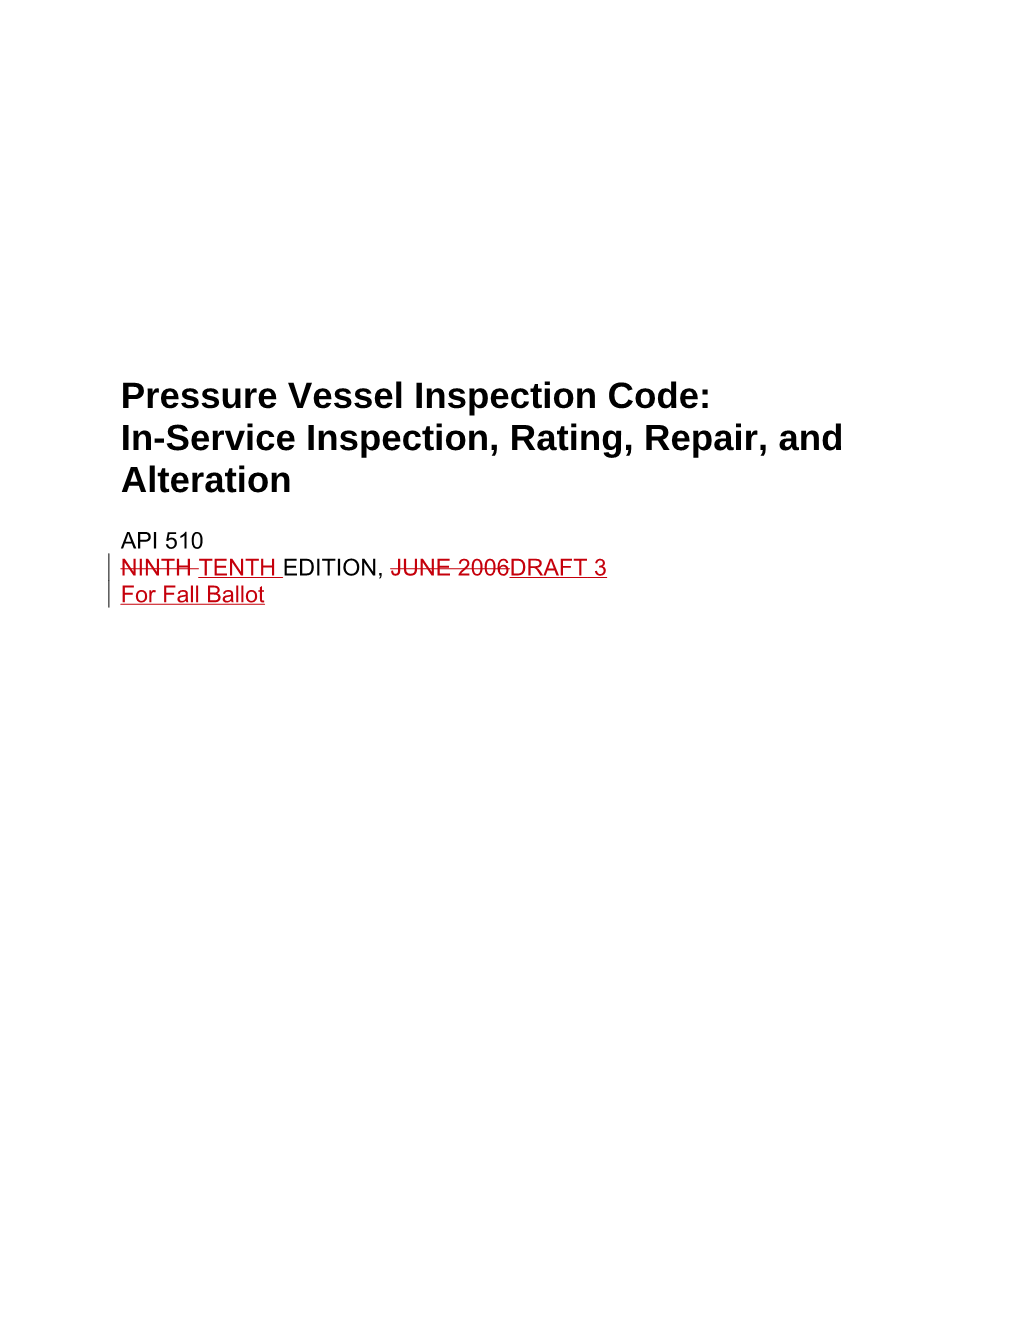 Pressure Vessel Inspection Code: